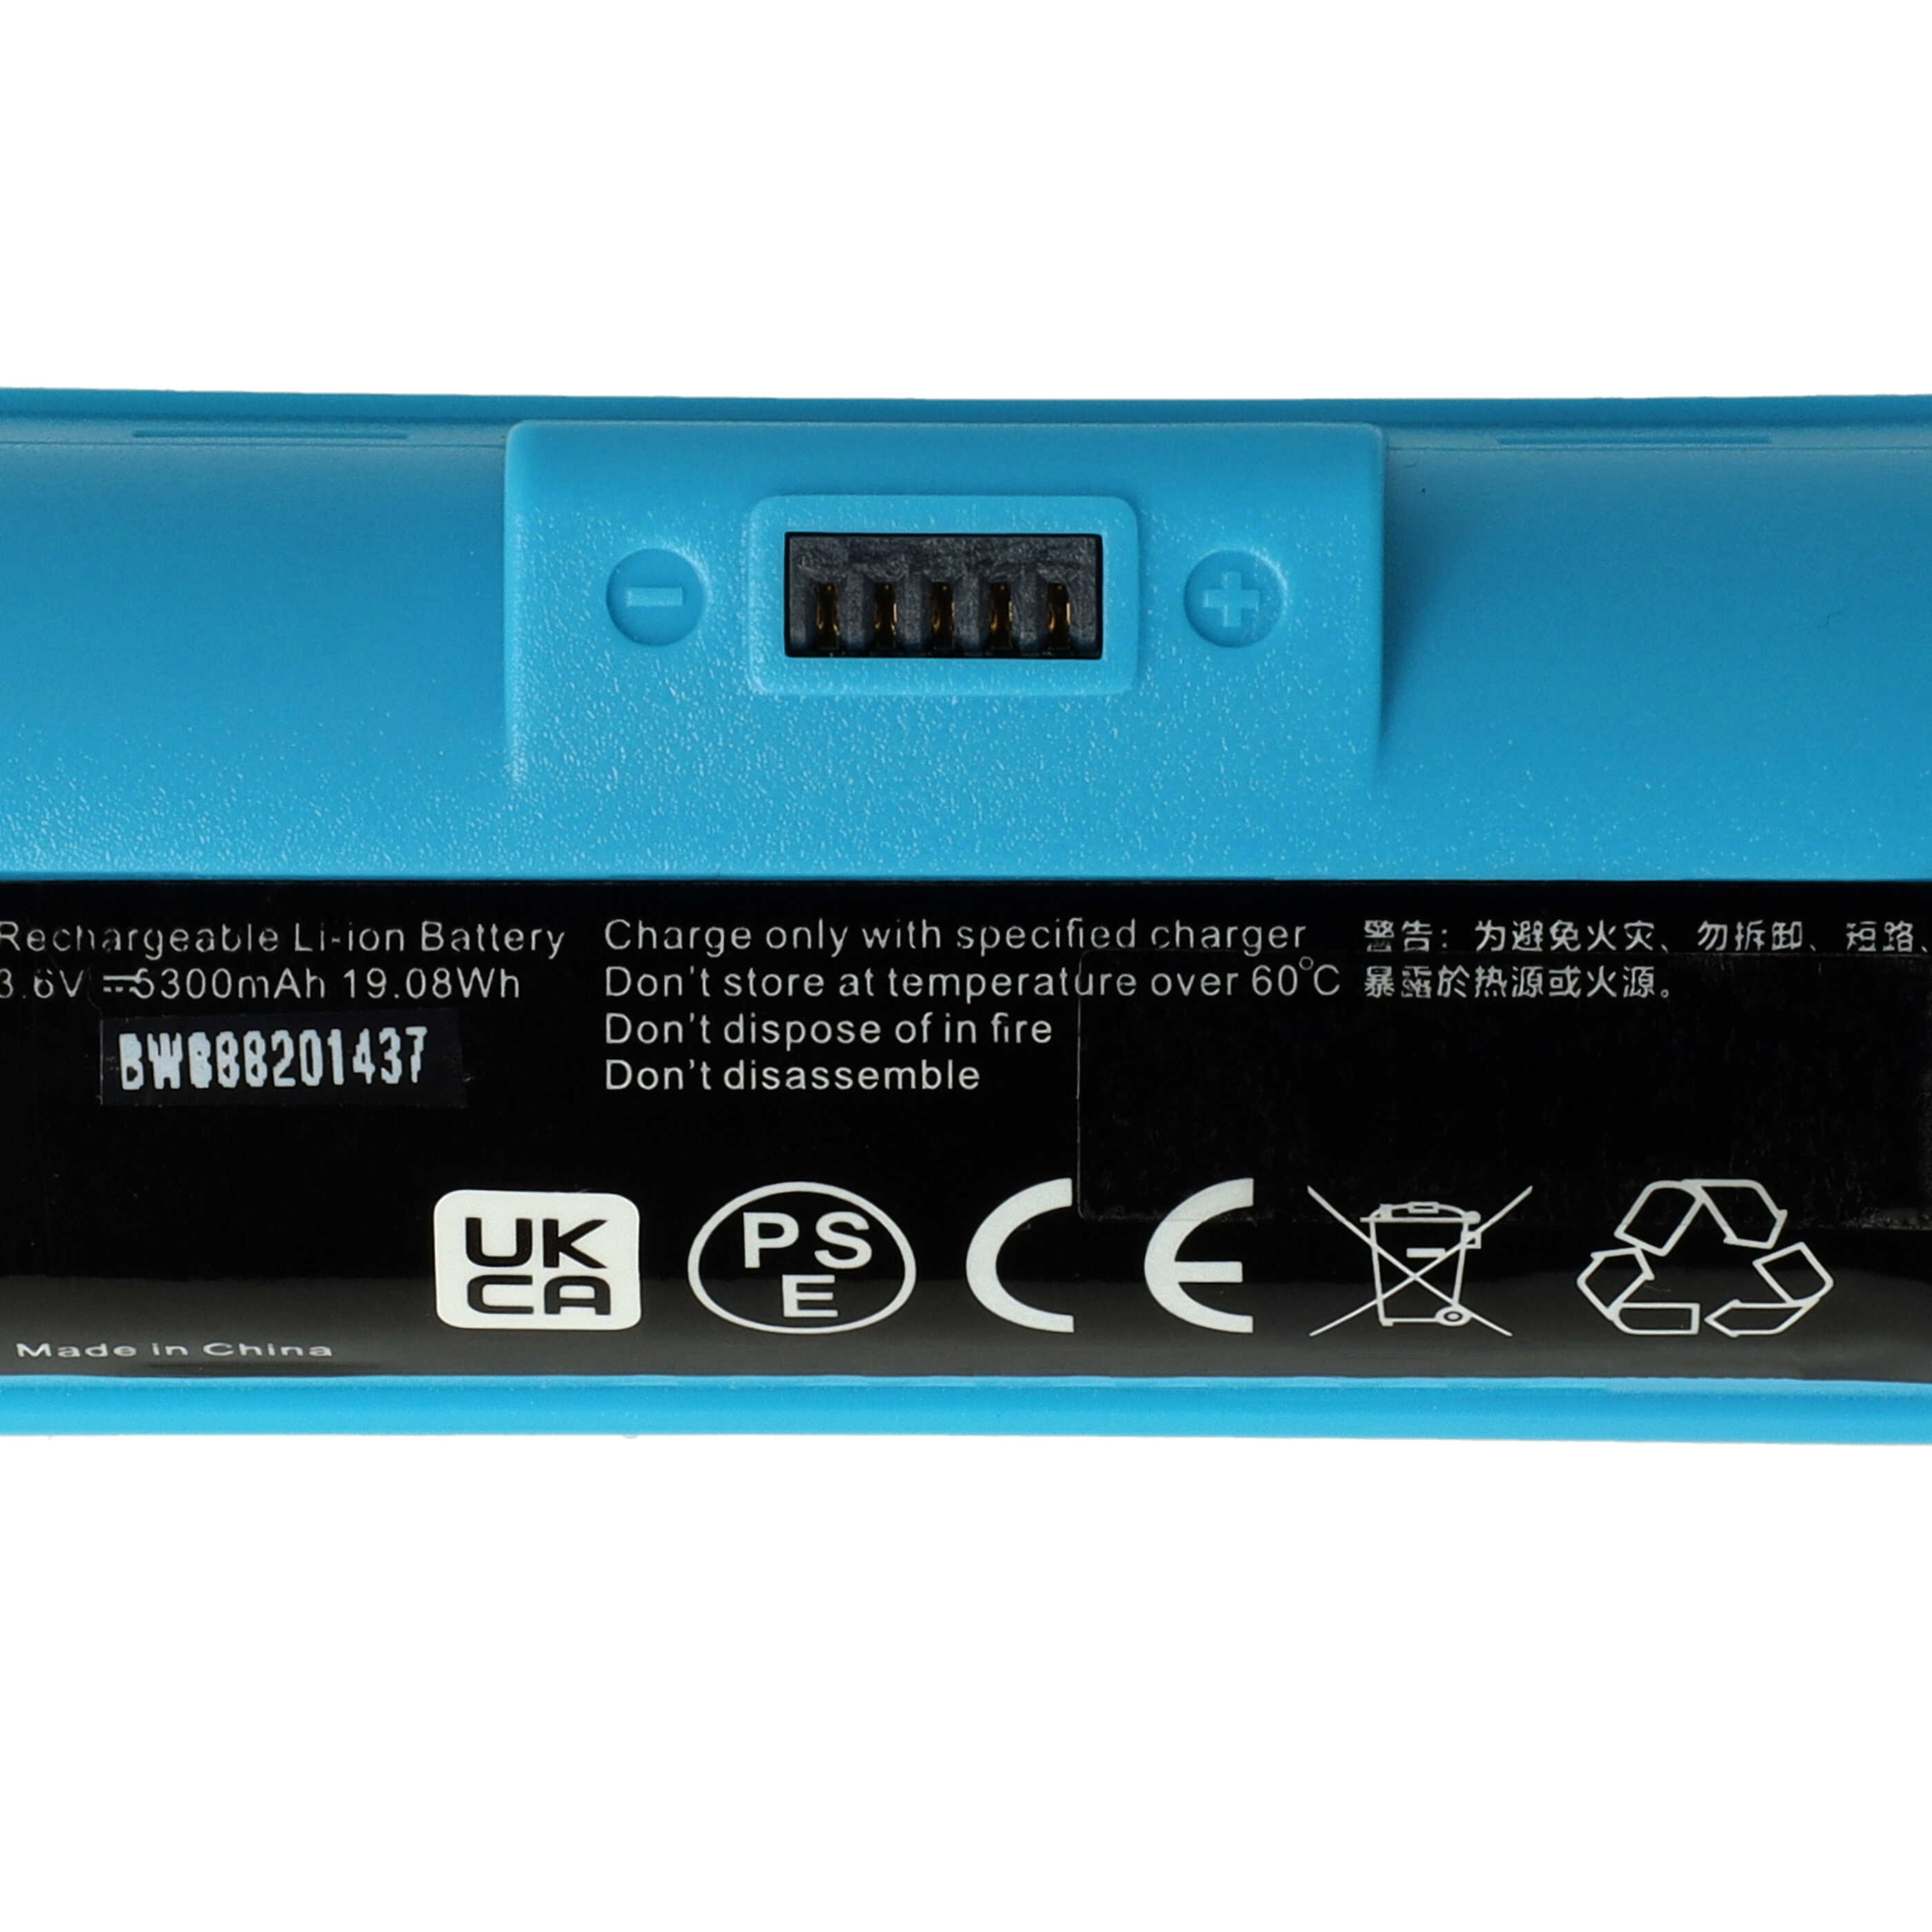 Akumulator do odkurzacza zamiennik iRobot BC674, 4446040 - 5300 mAh 3,6 V Li-Ion, niebieski